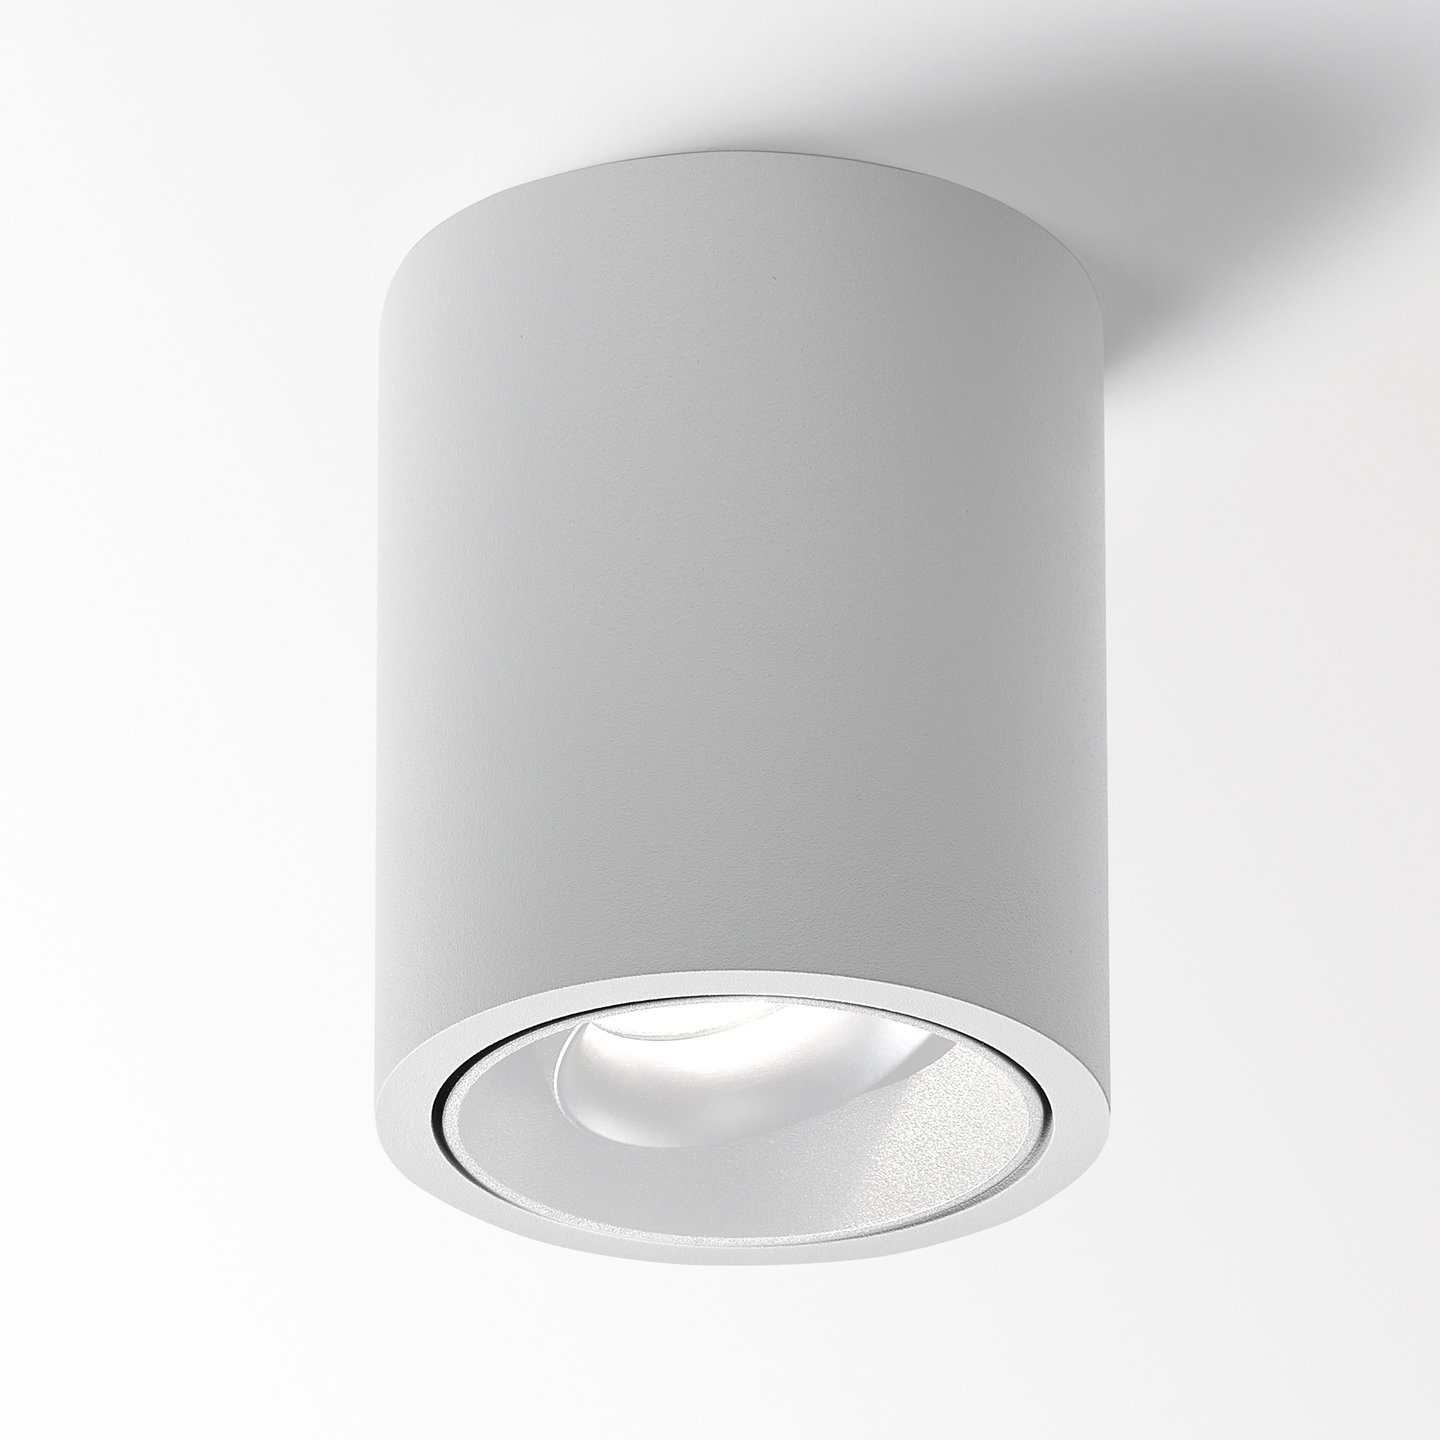 DELTA Boxy R OK ceiling light / spotlight - 251 77 811 922 ED8 W-W | REUTER